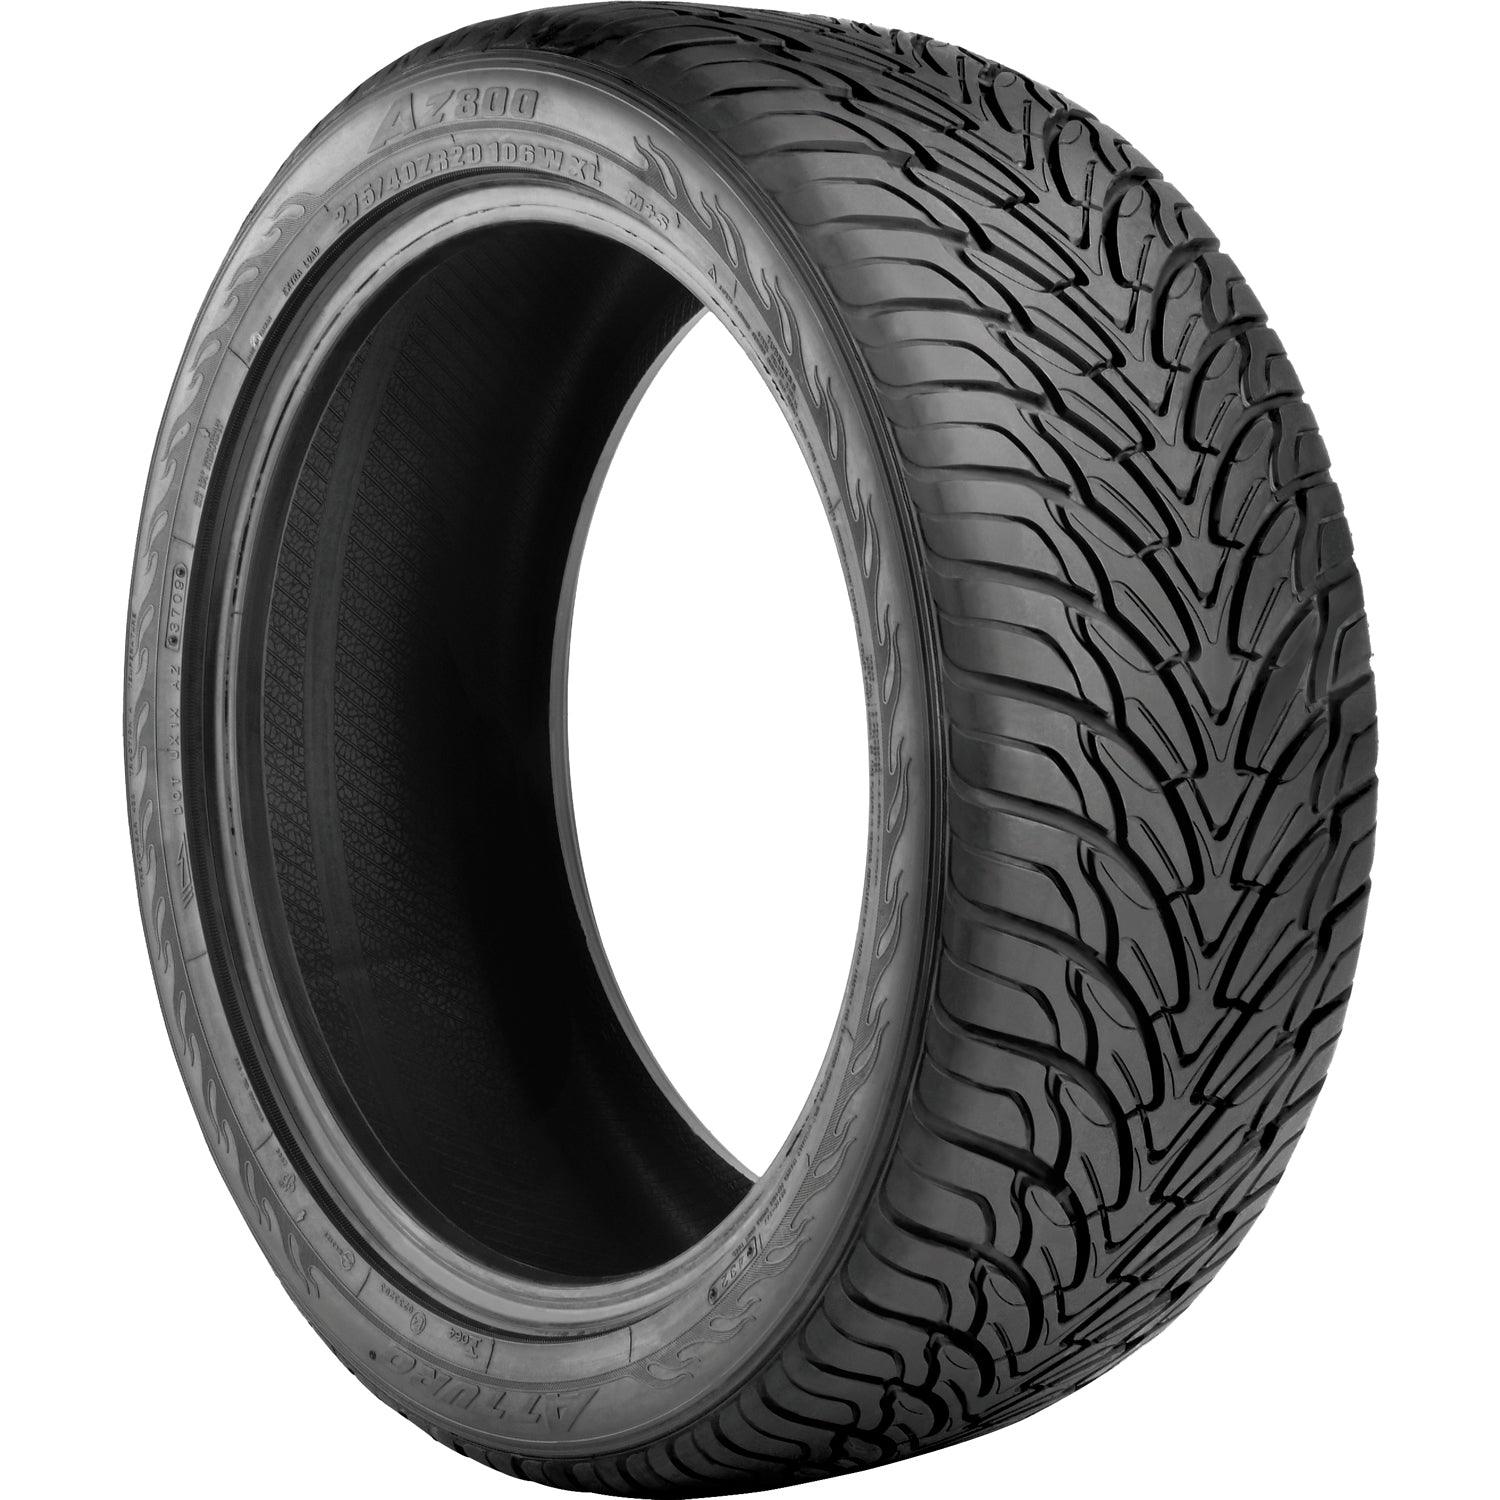 ATTURO AZ800 255/30R22 (28.1X10.2R 22) Tires